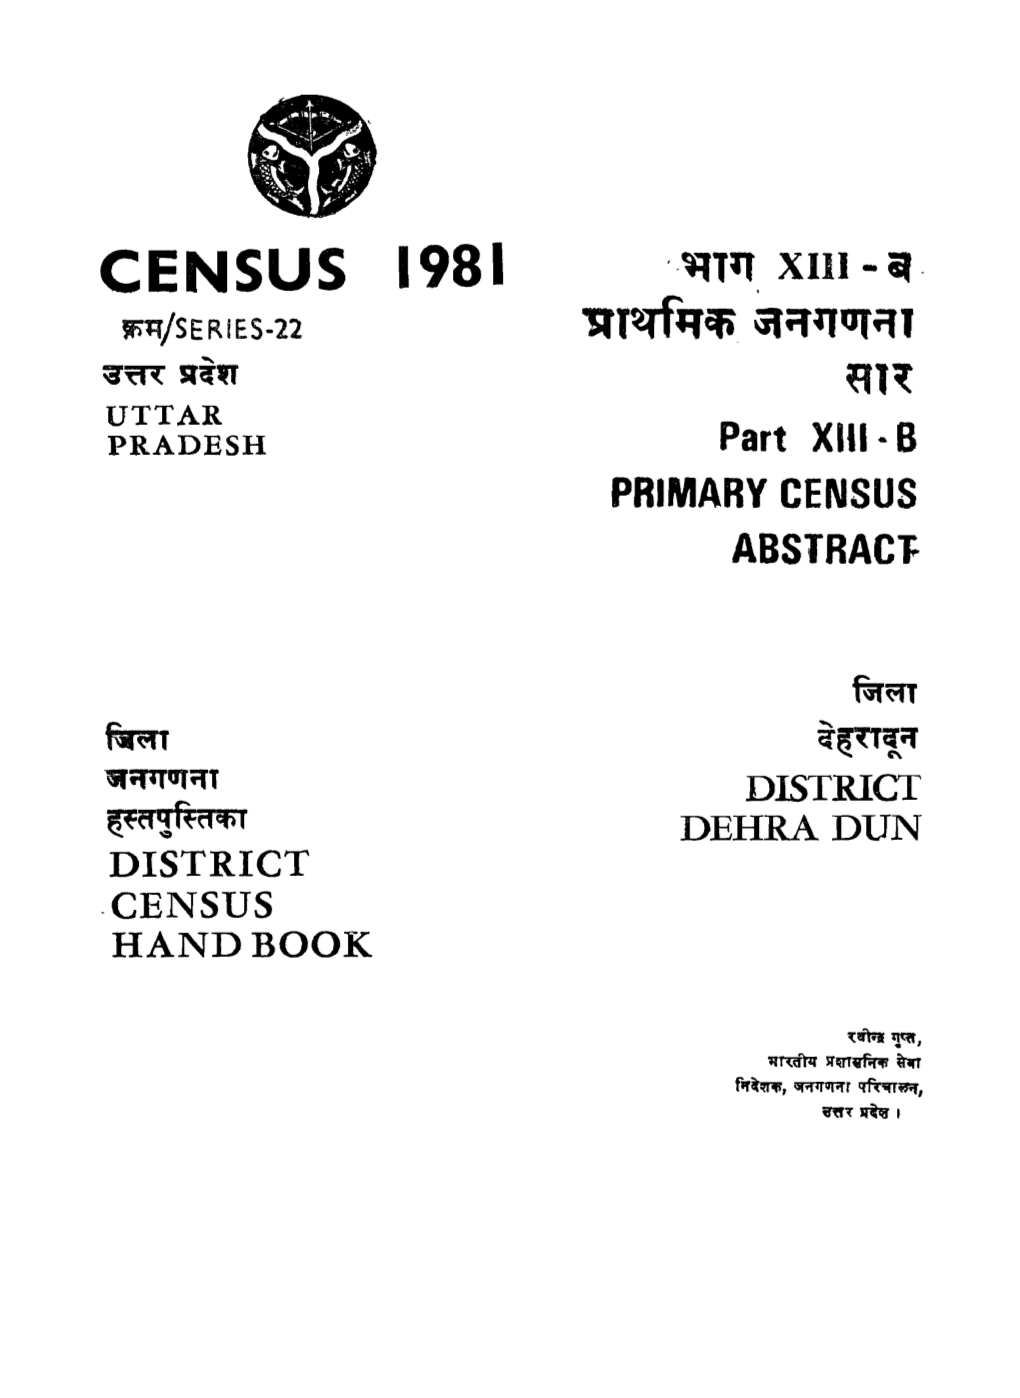 District Census Handbook, Dehra Dun, Part XIII-B, Series-22, Uttar Pradesh